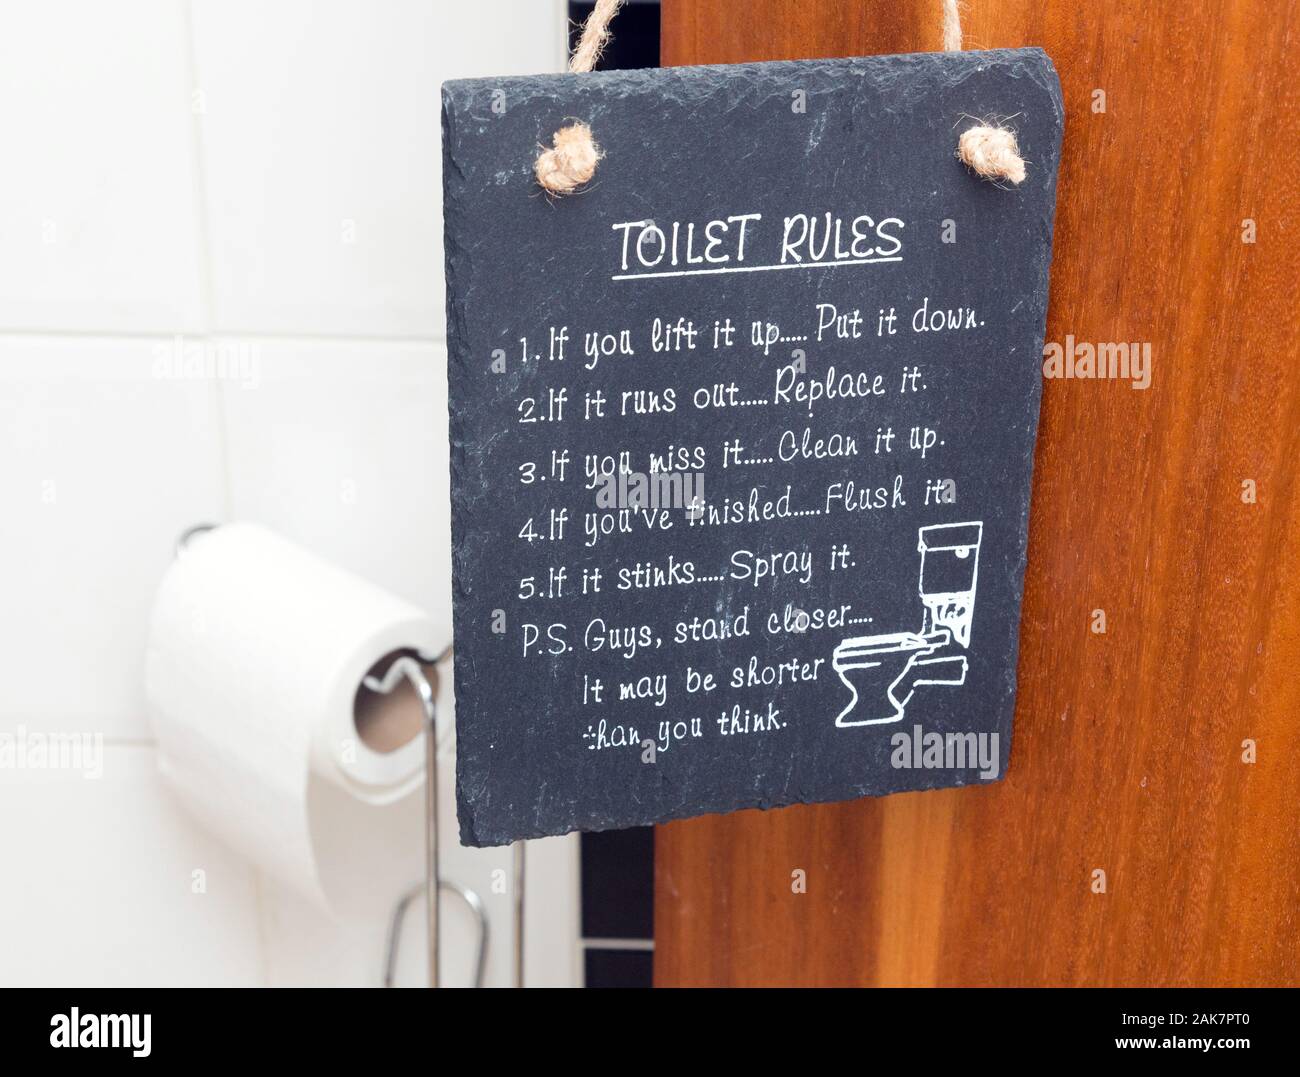 Toilet rules etiquette sign Stock Photo